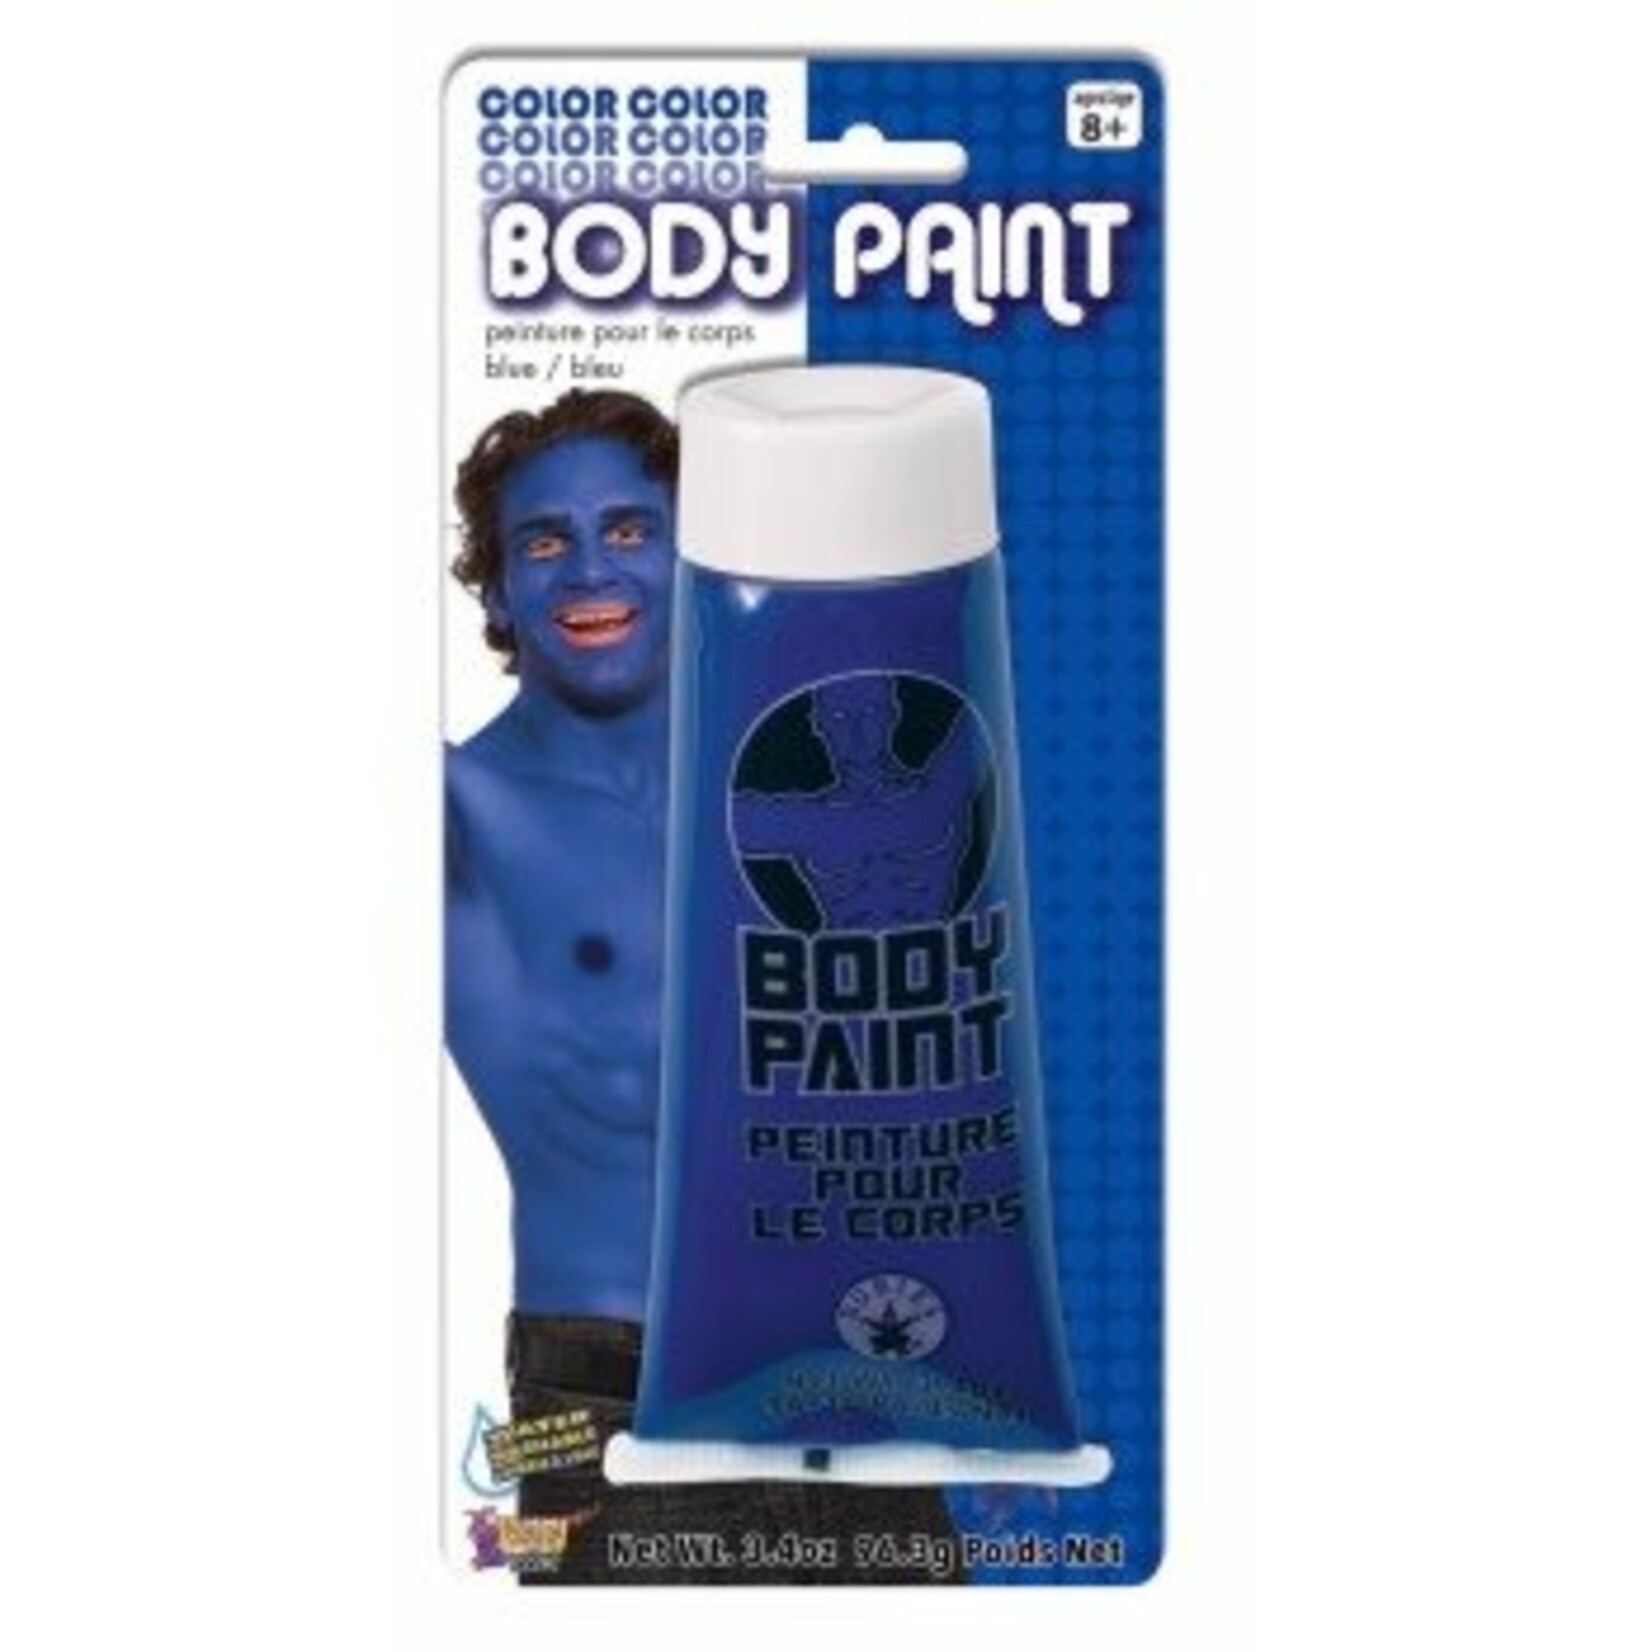 Body Paint - Samaroo's Limited